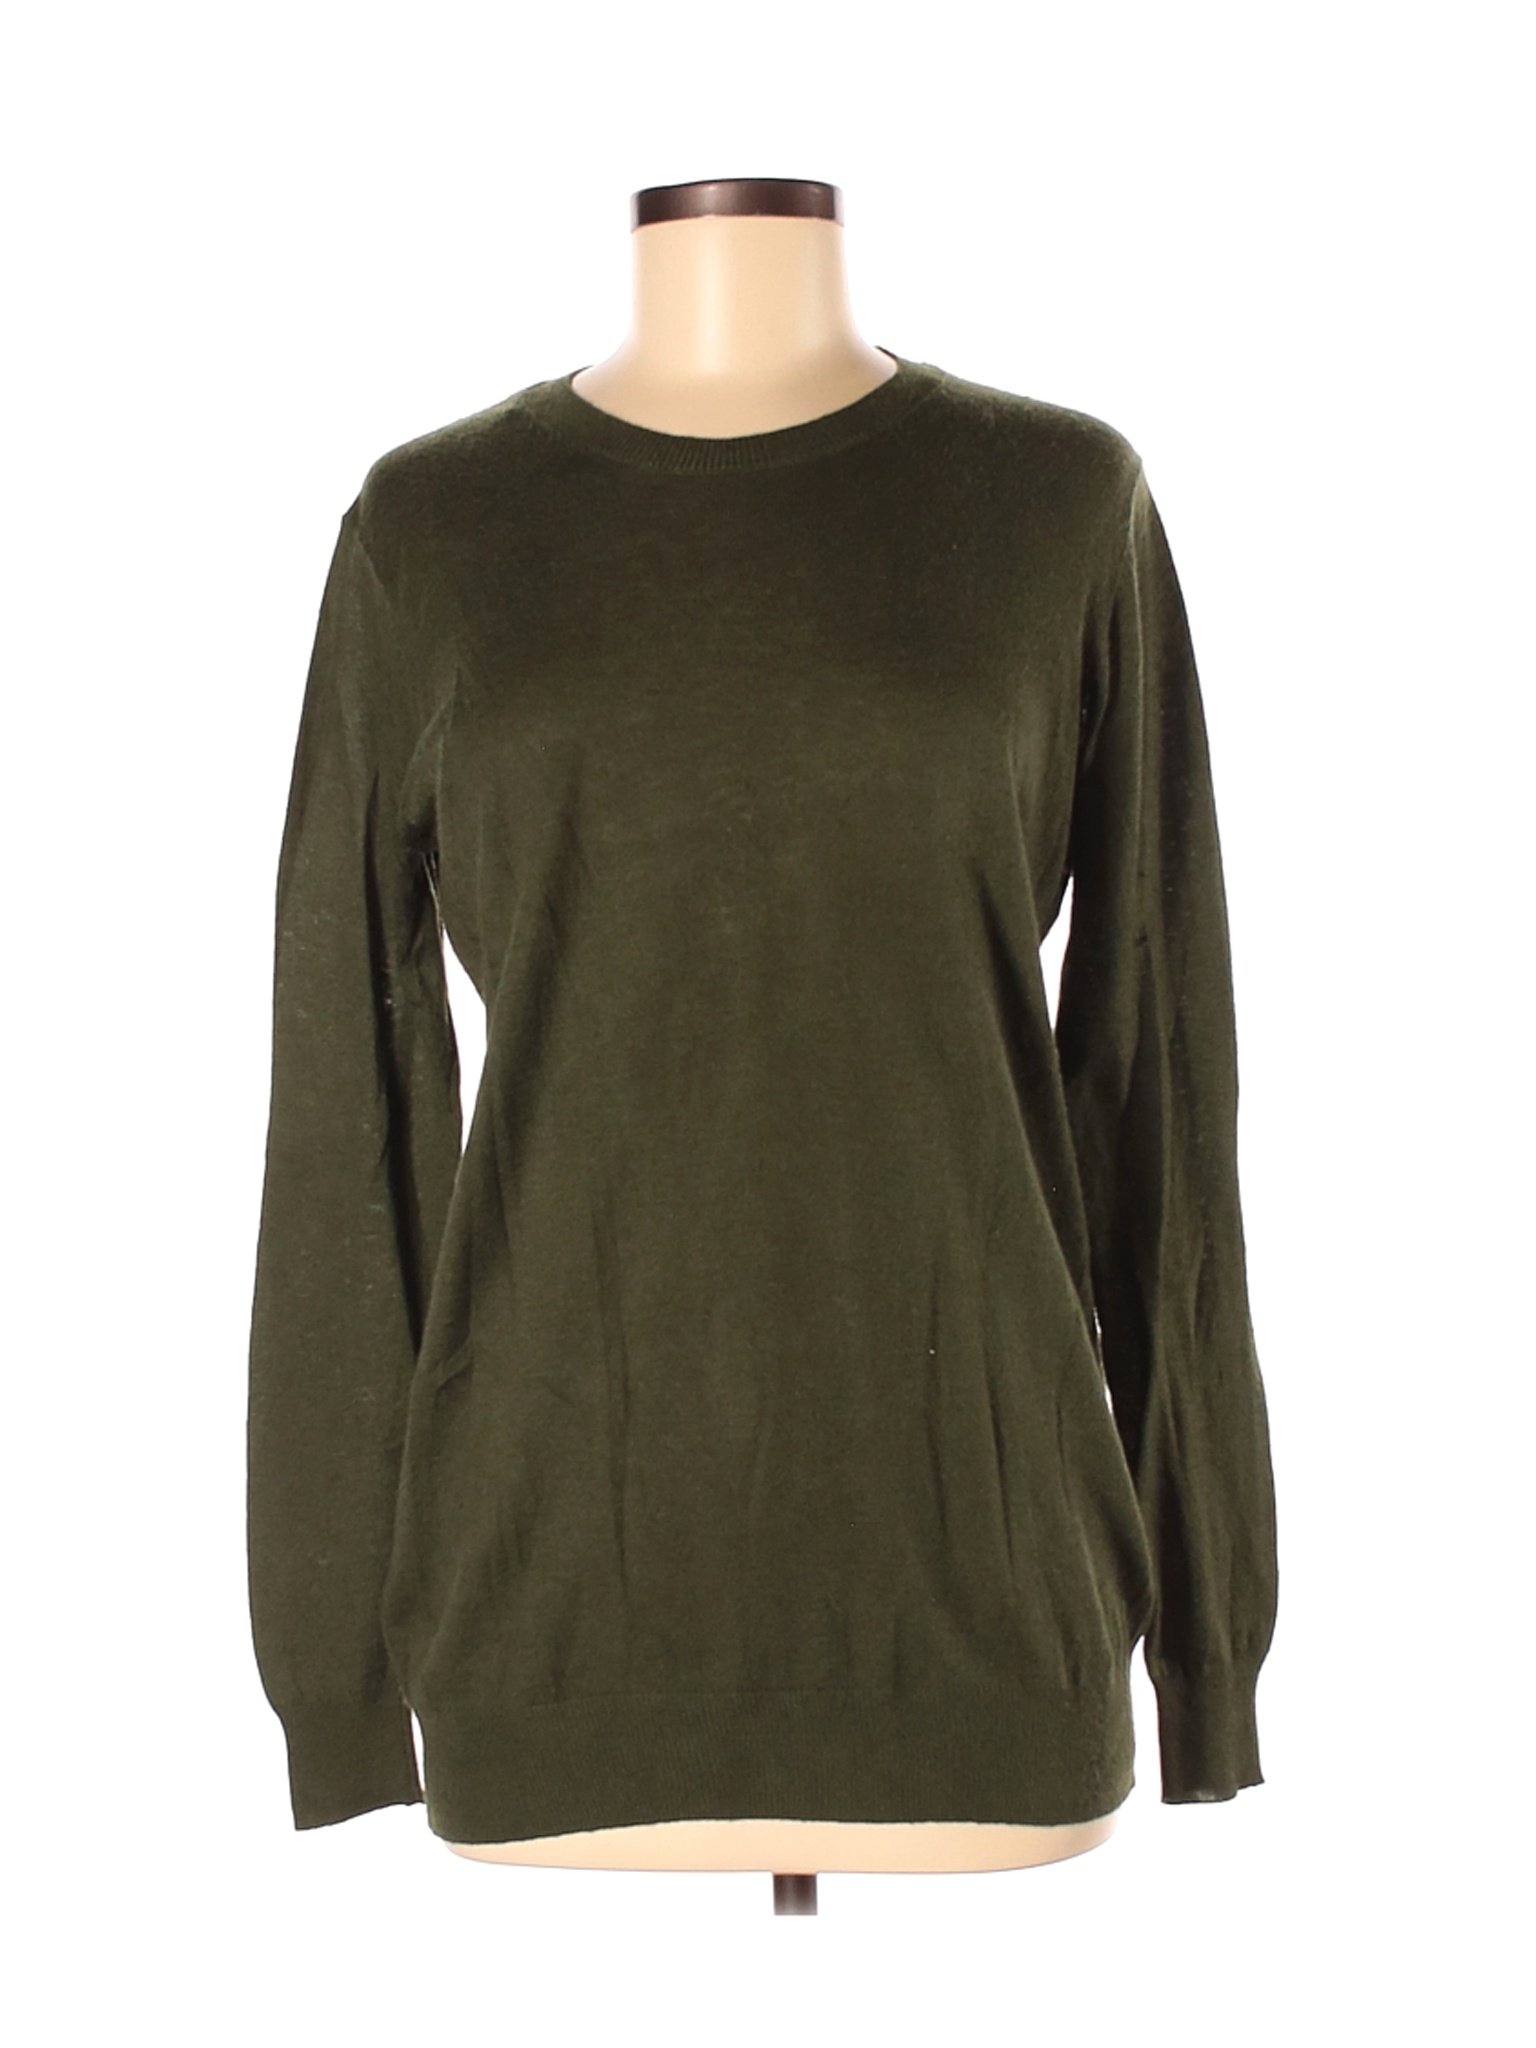 Zara Women Green Pullover Sweater M | eBay